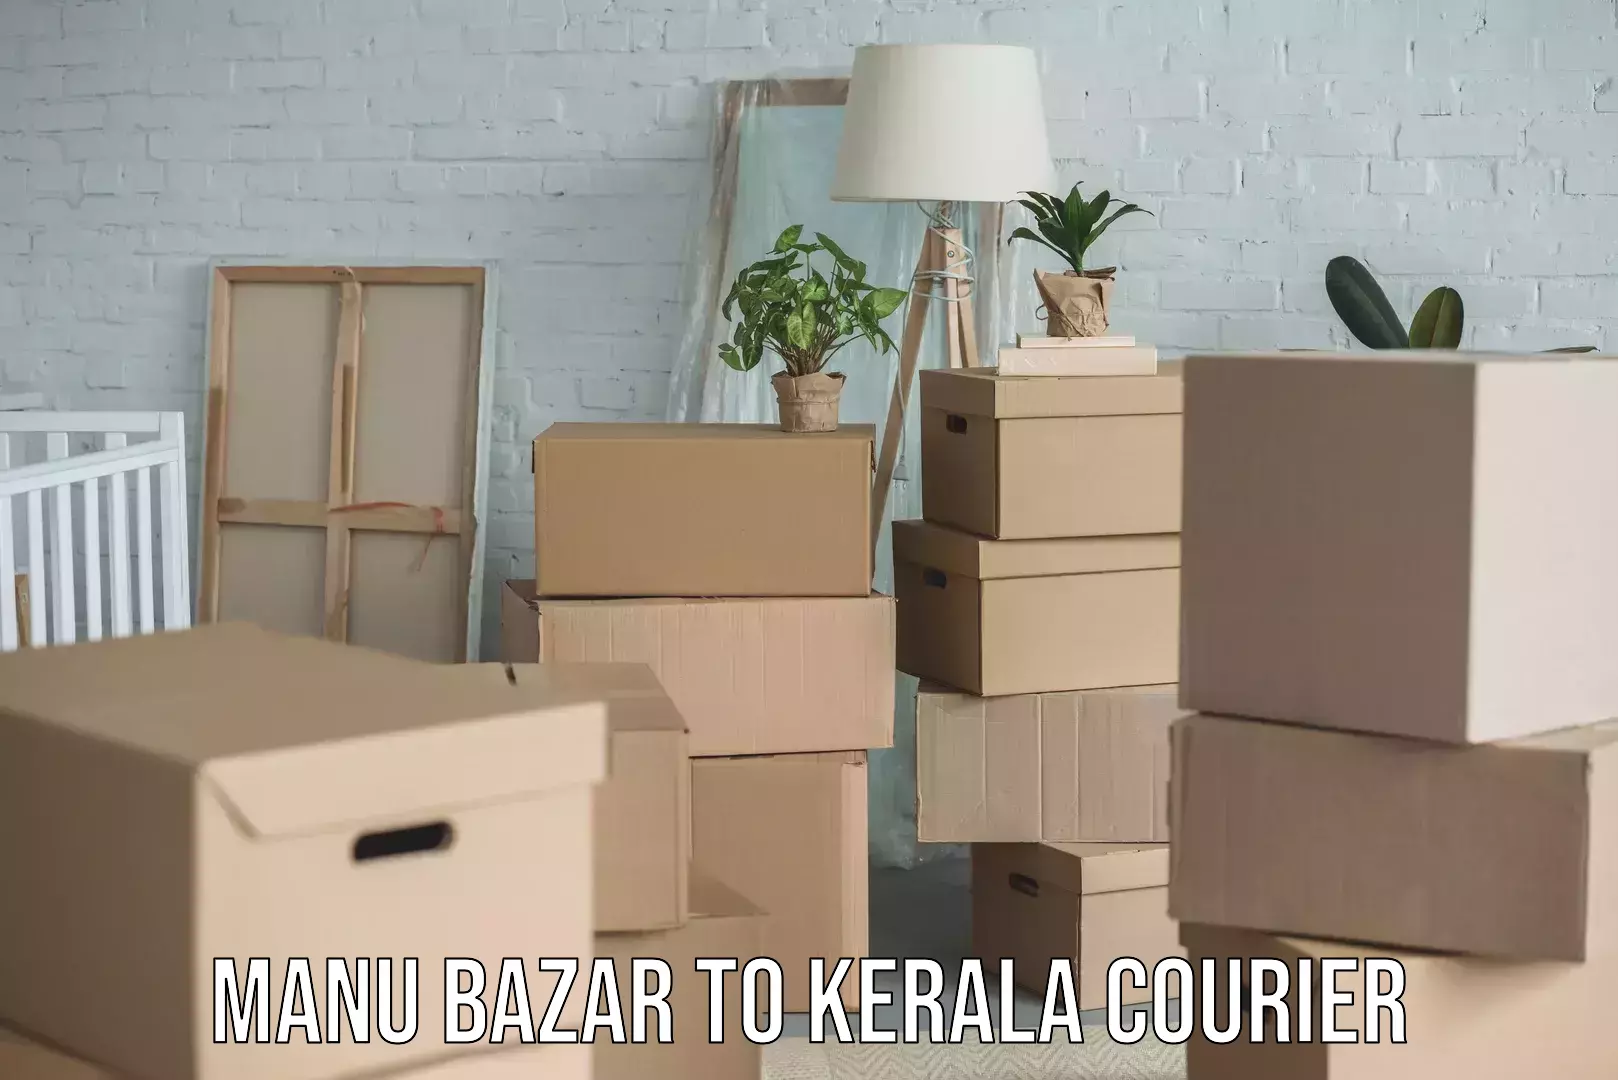 Doorstep delivery service Manu Bazar to Kerala